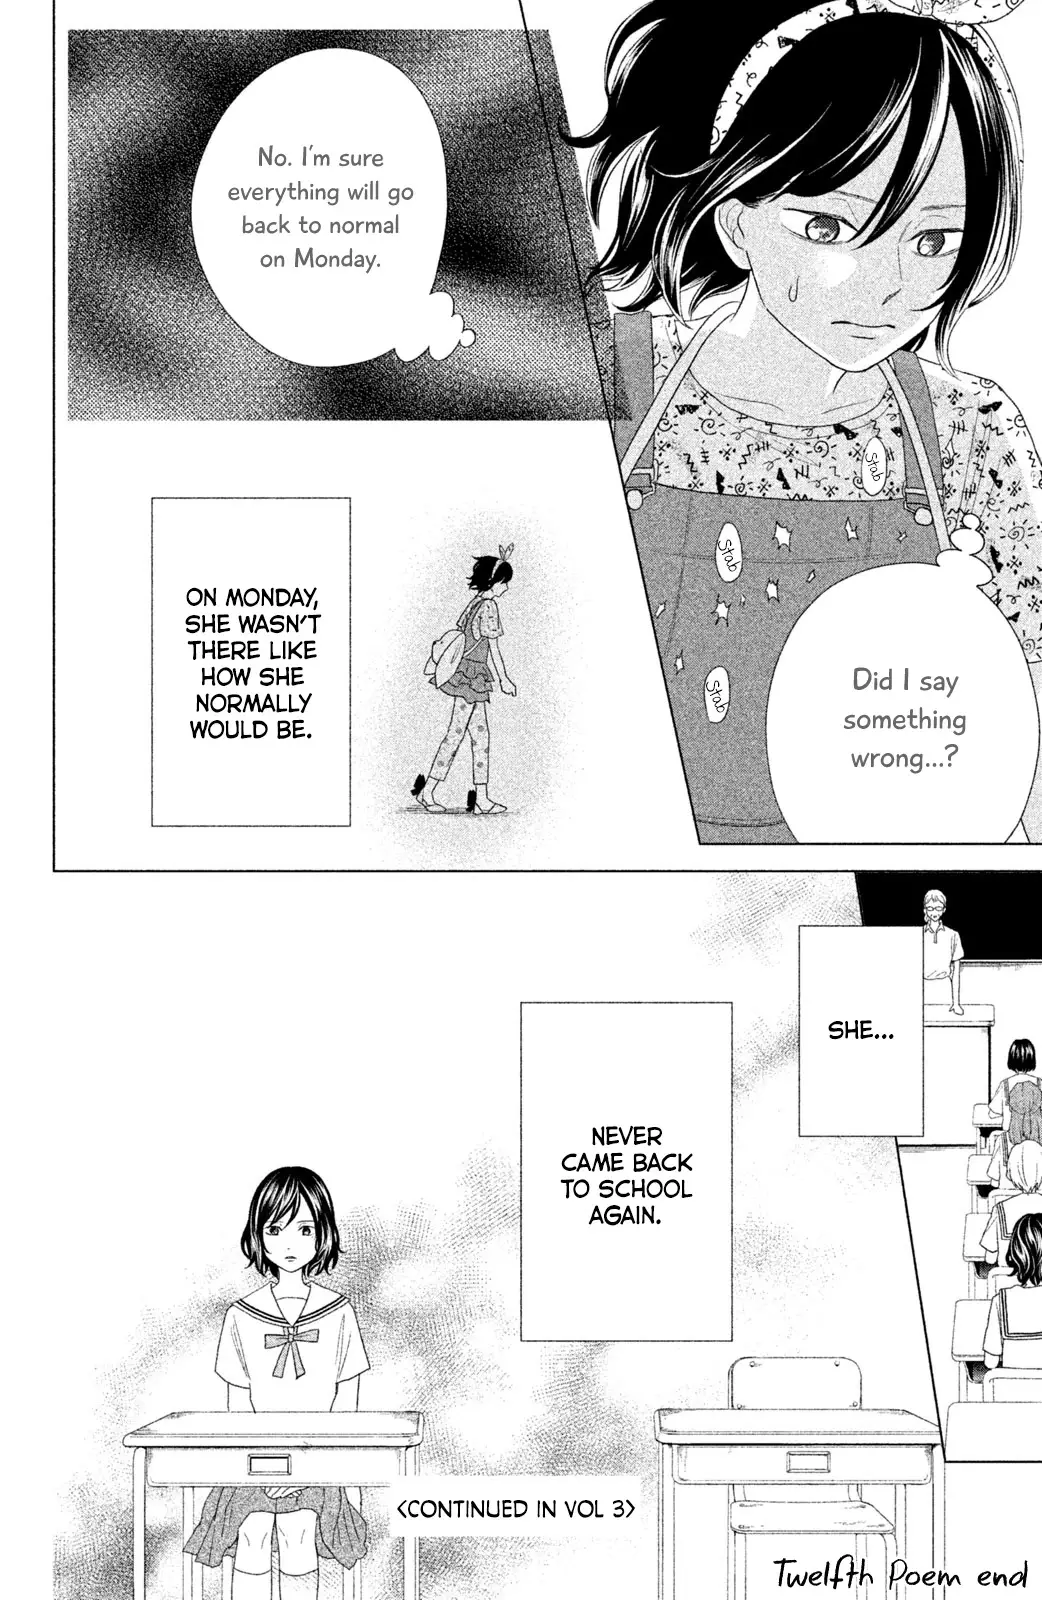 Chihayafuru: Middle School Arc - 12 page 29